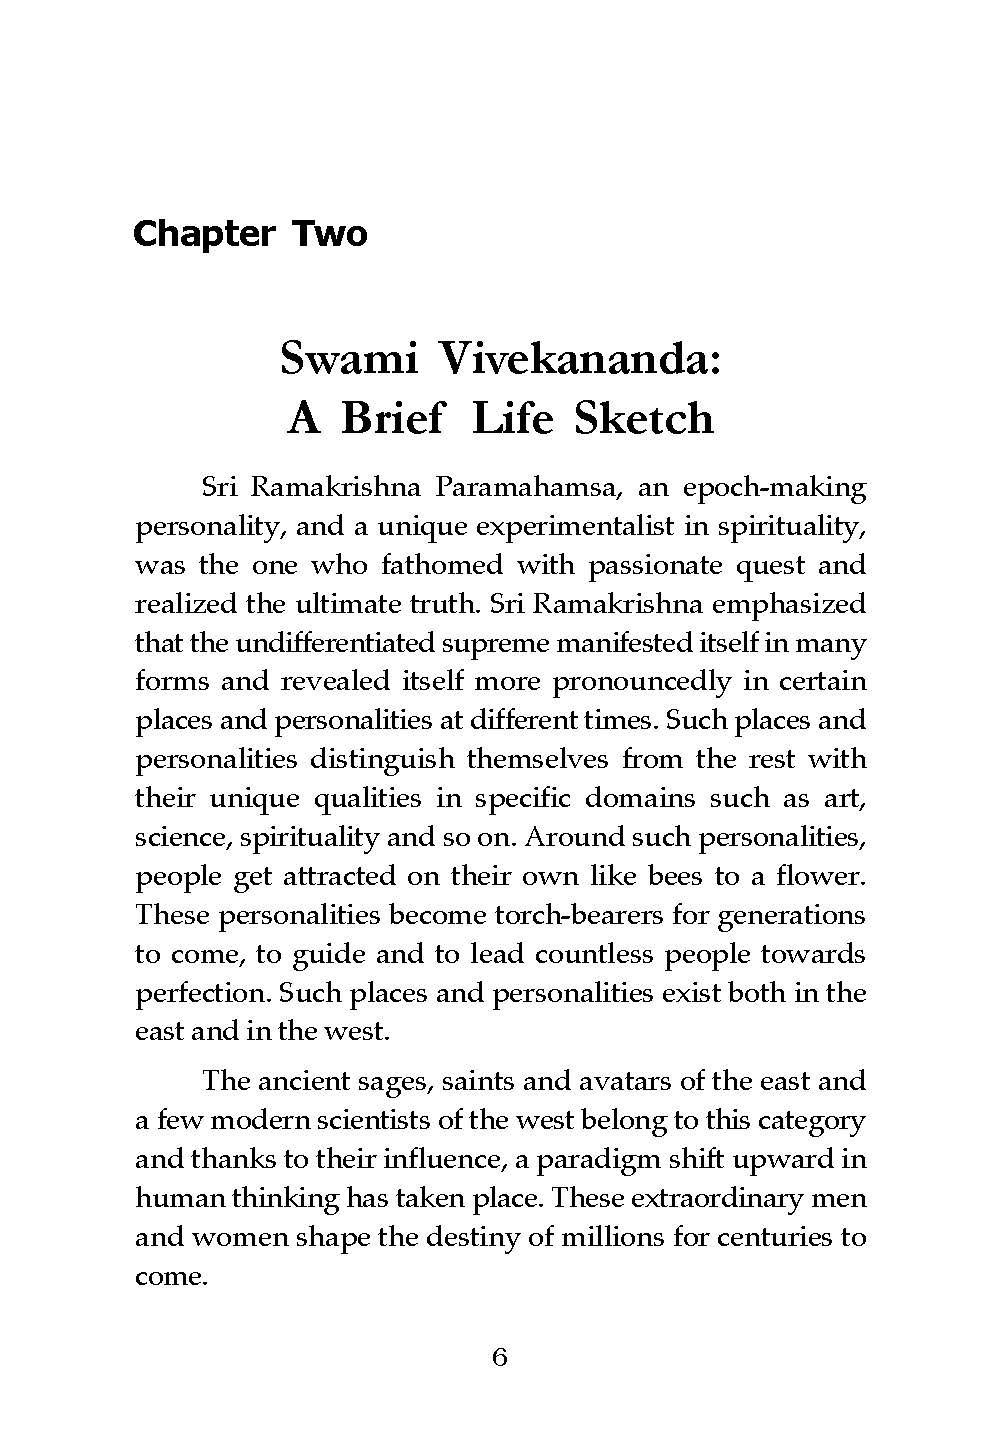 Swami Vivekananda An Intuitive Scientist